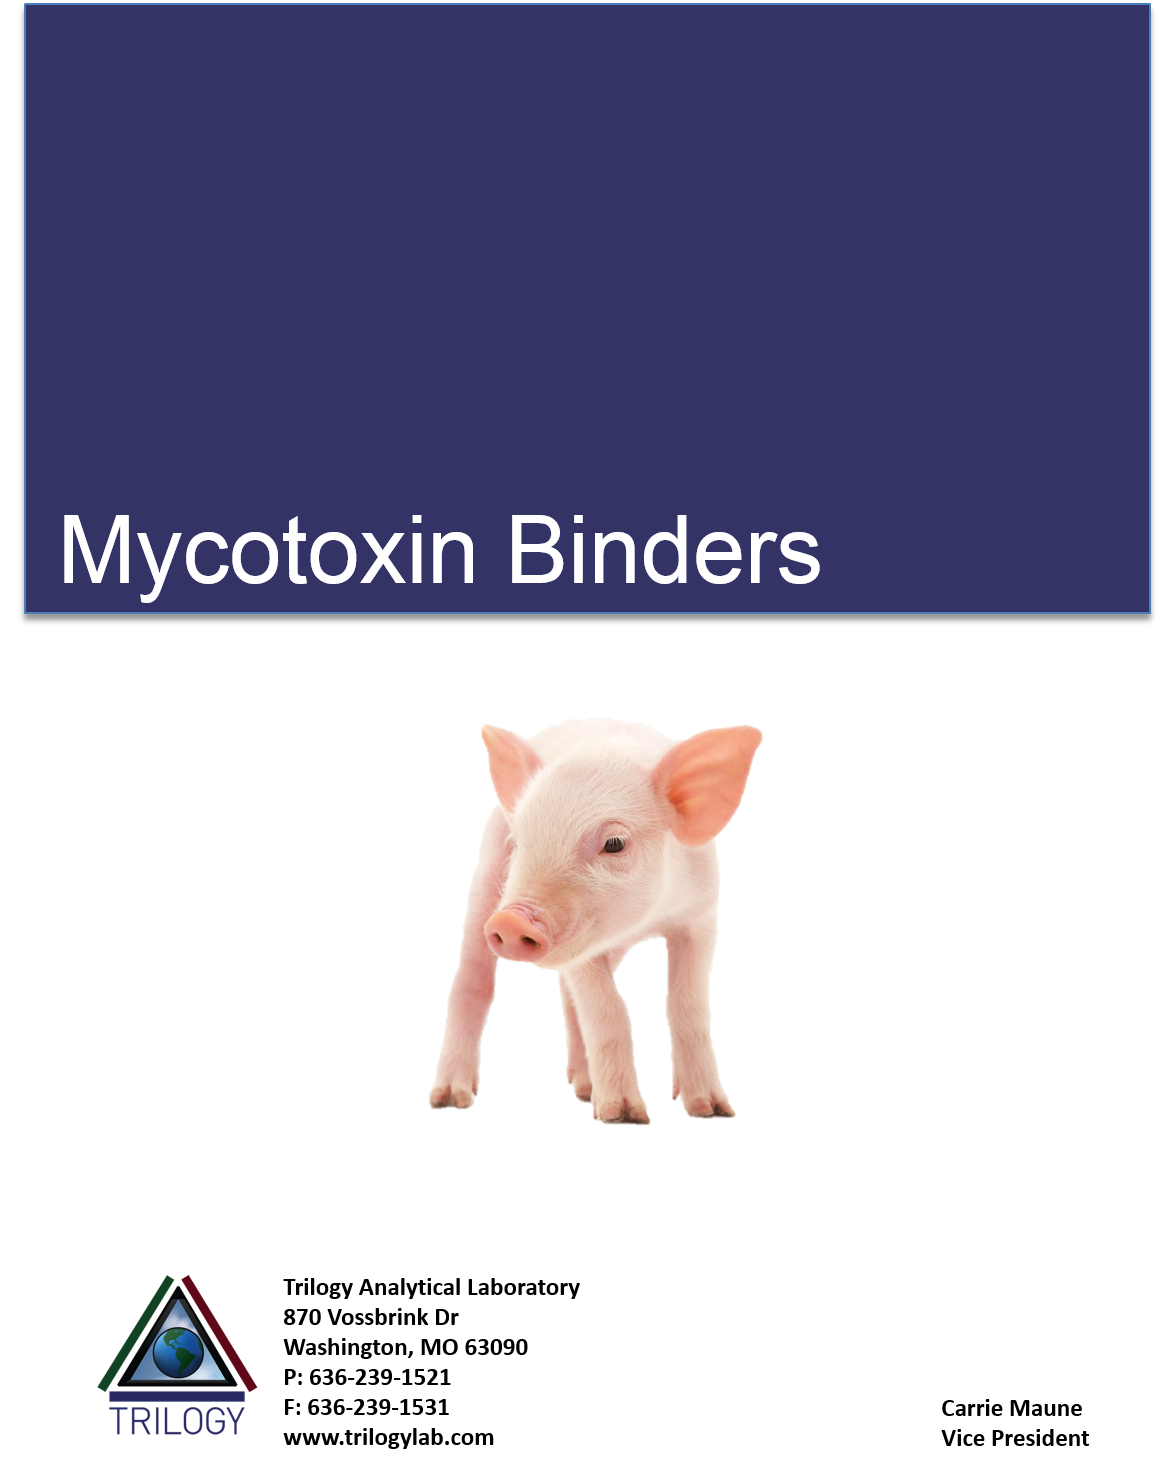 Mycotoxin Binders WP.png